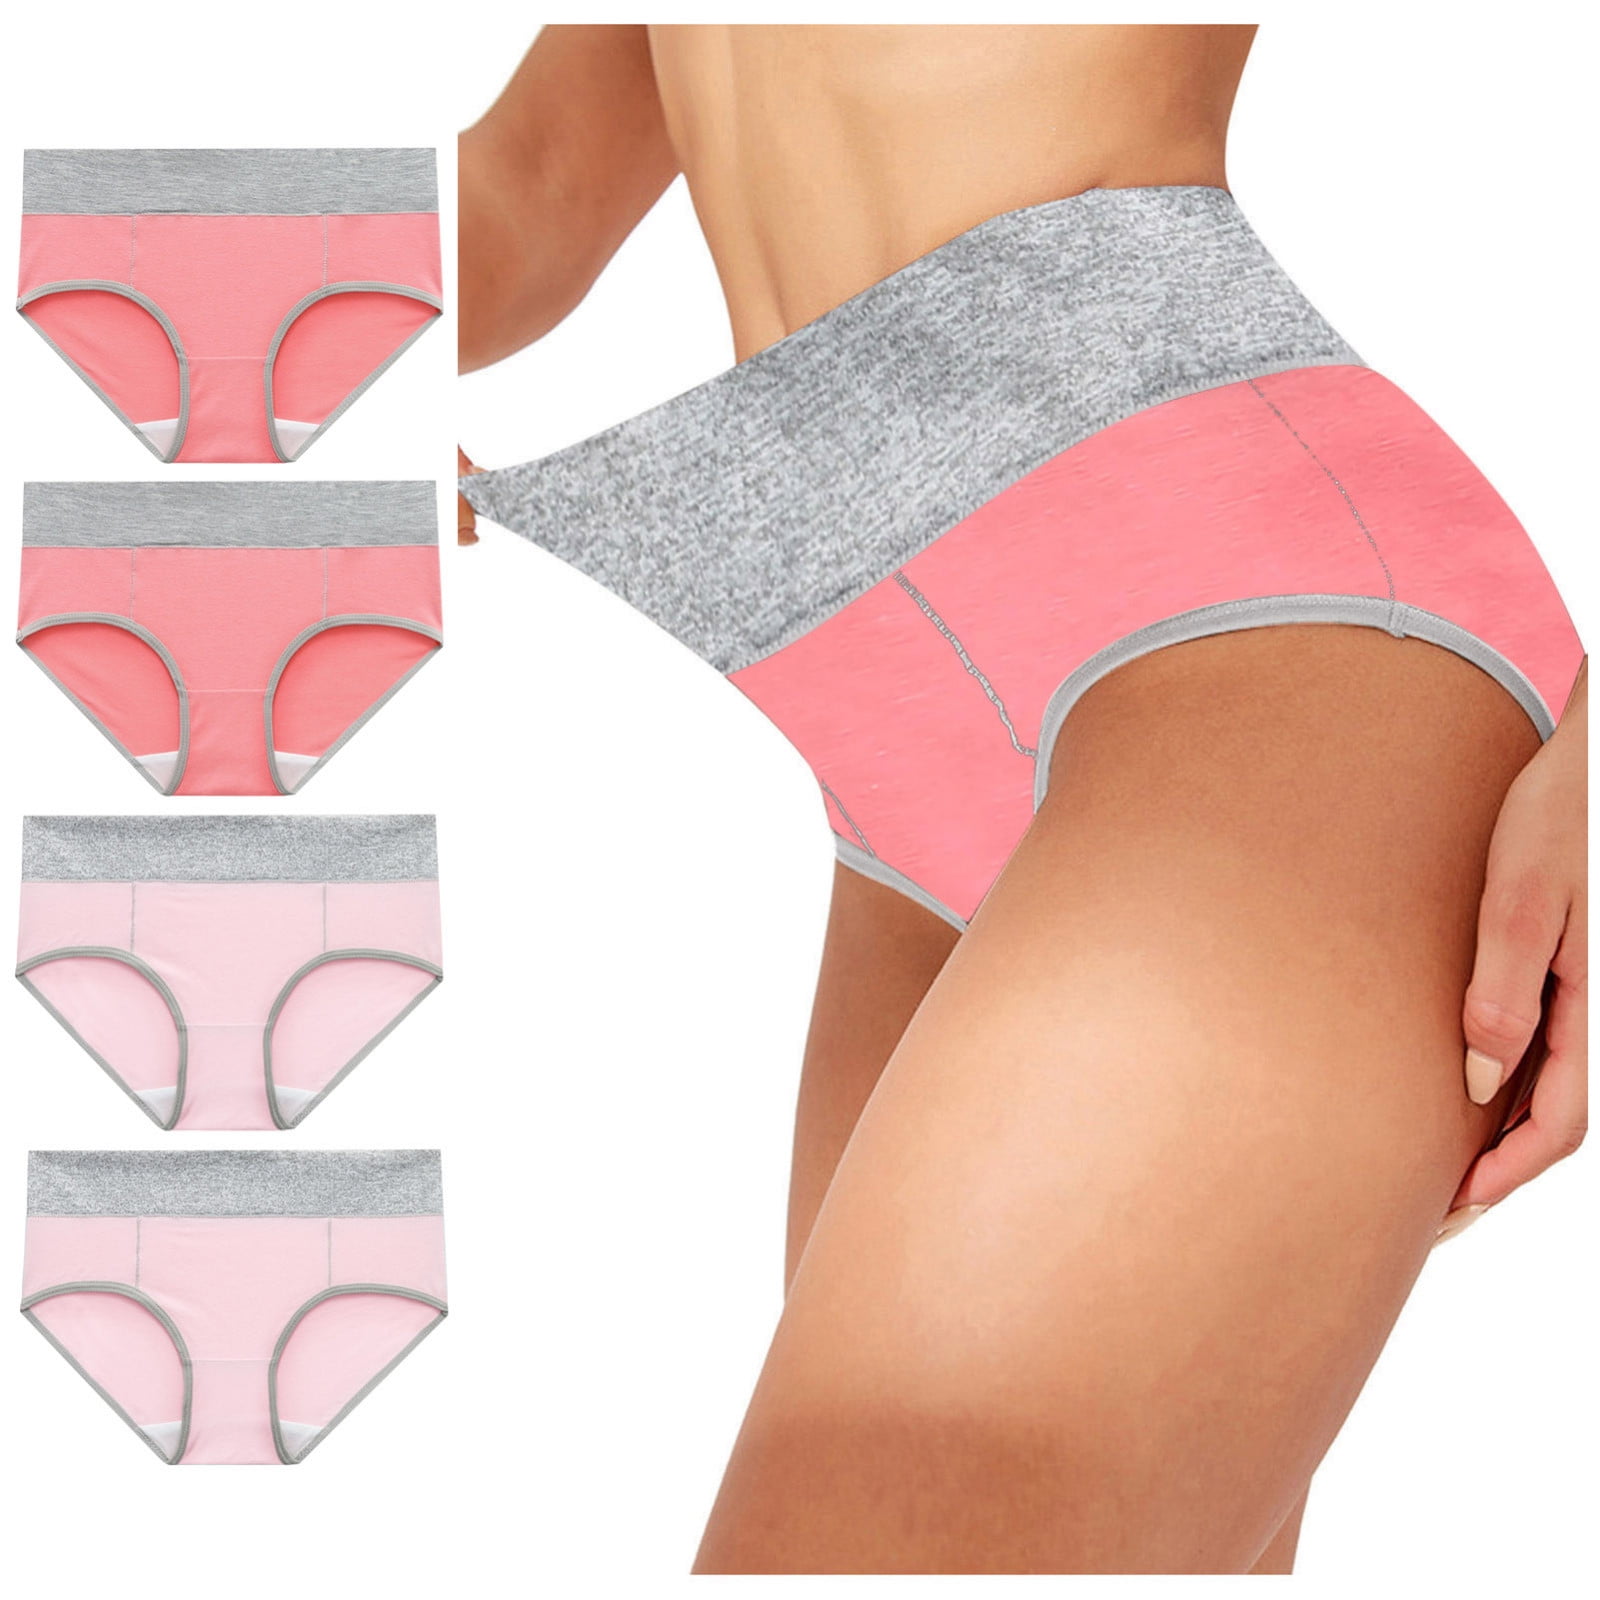 Women's Cotton Low Waist Underwear Breathable Briefs Knickers Panties Underpants